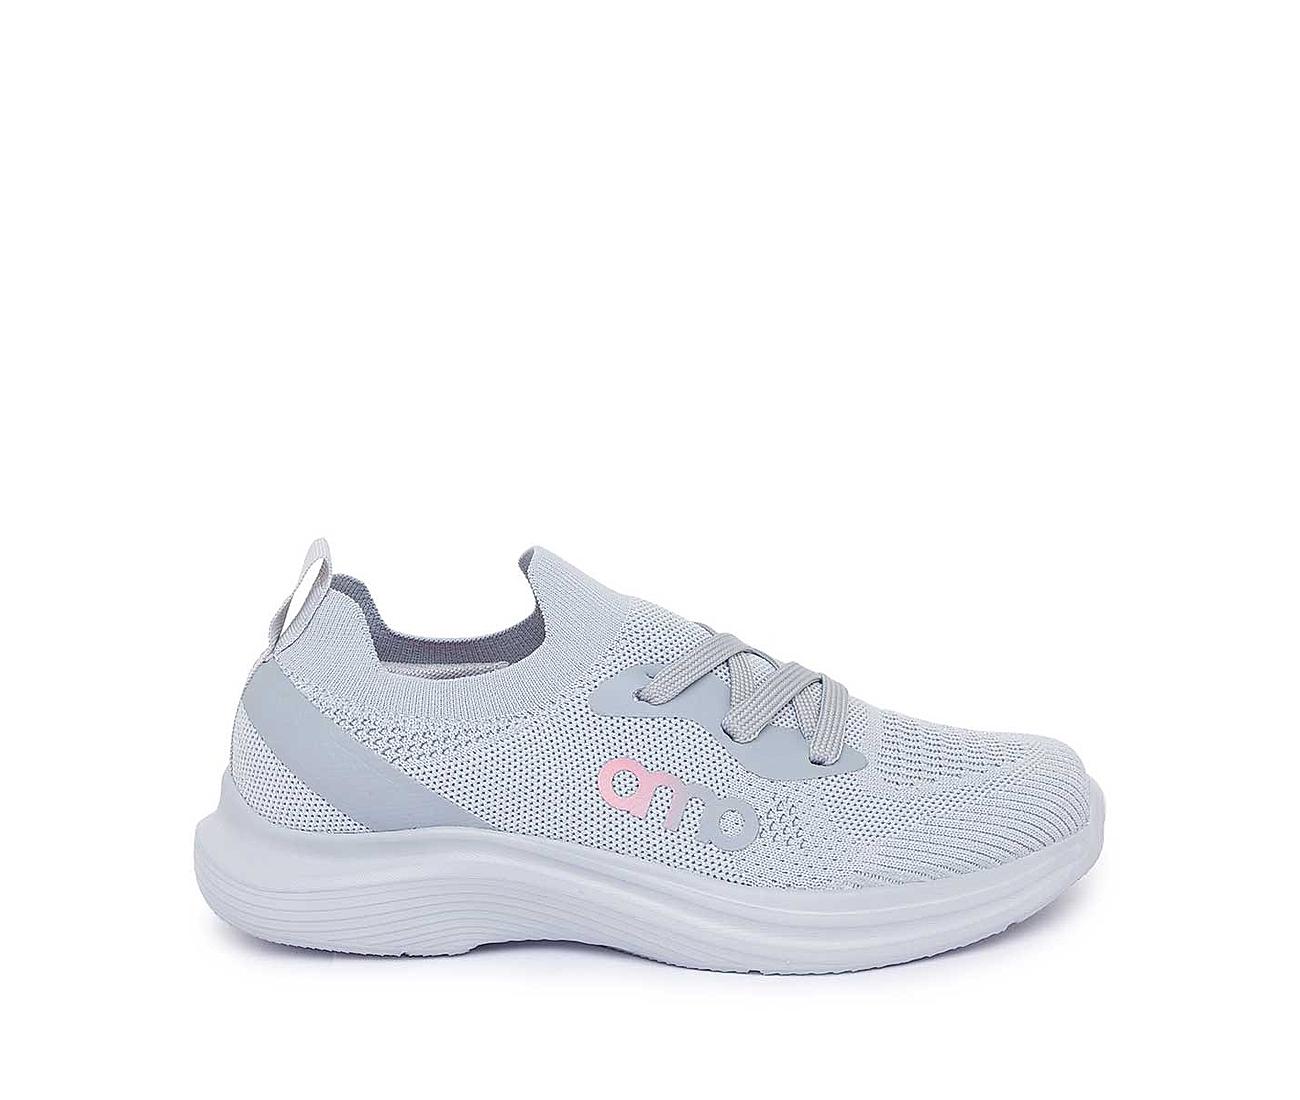 JAN & JUL Unisex Shoes for Kids, Slip-on Toddler Sneakers (Khaki, US Size  13) - Walmart.com